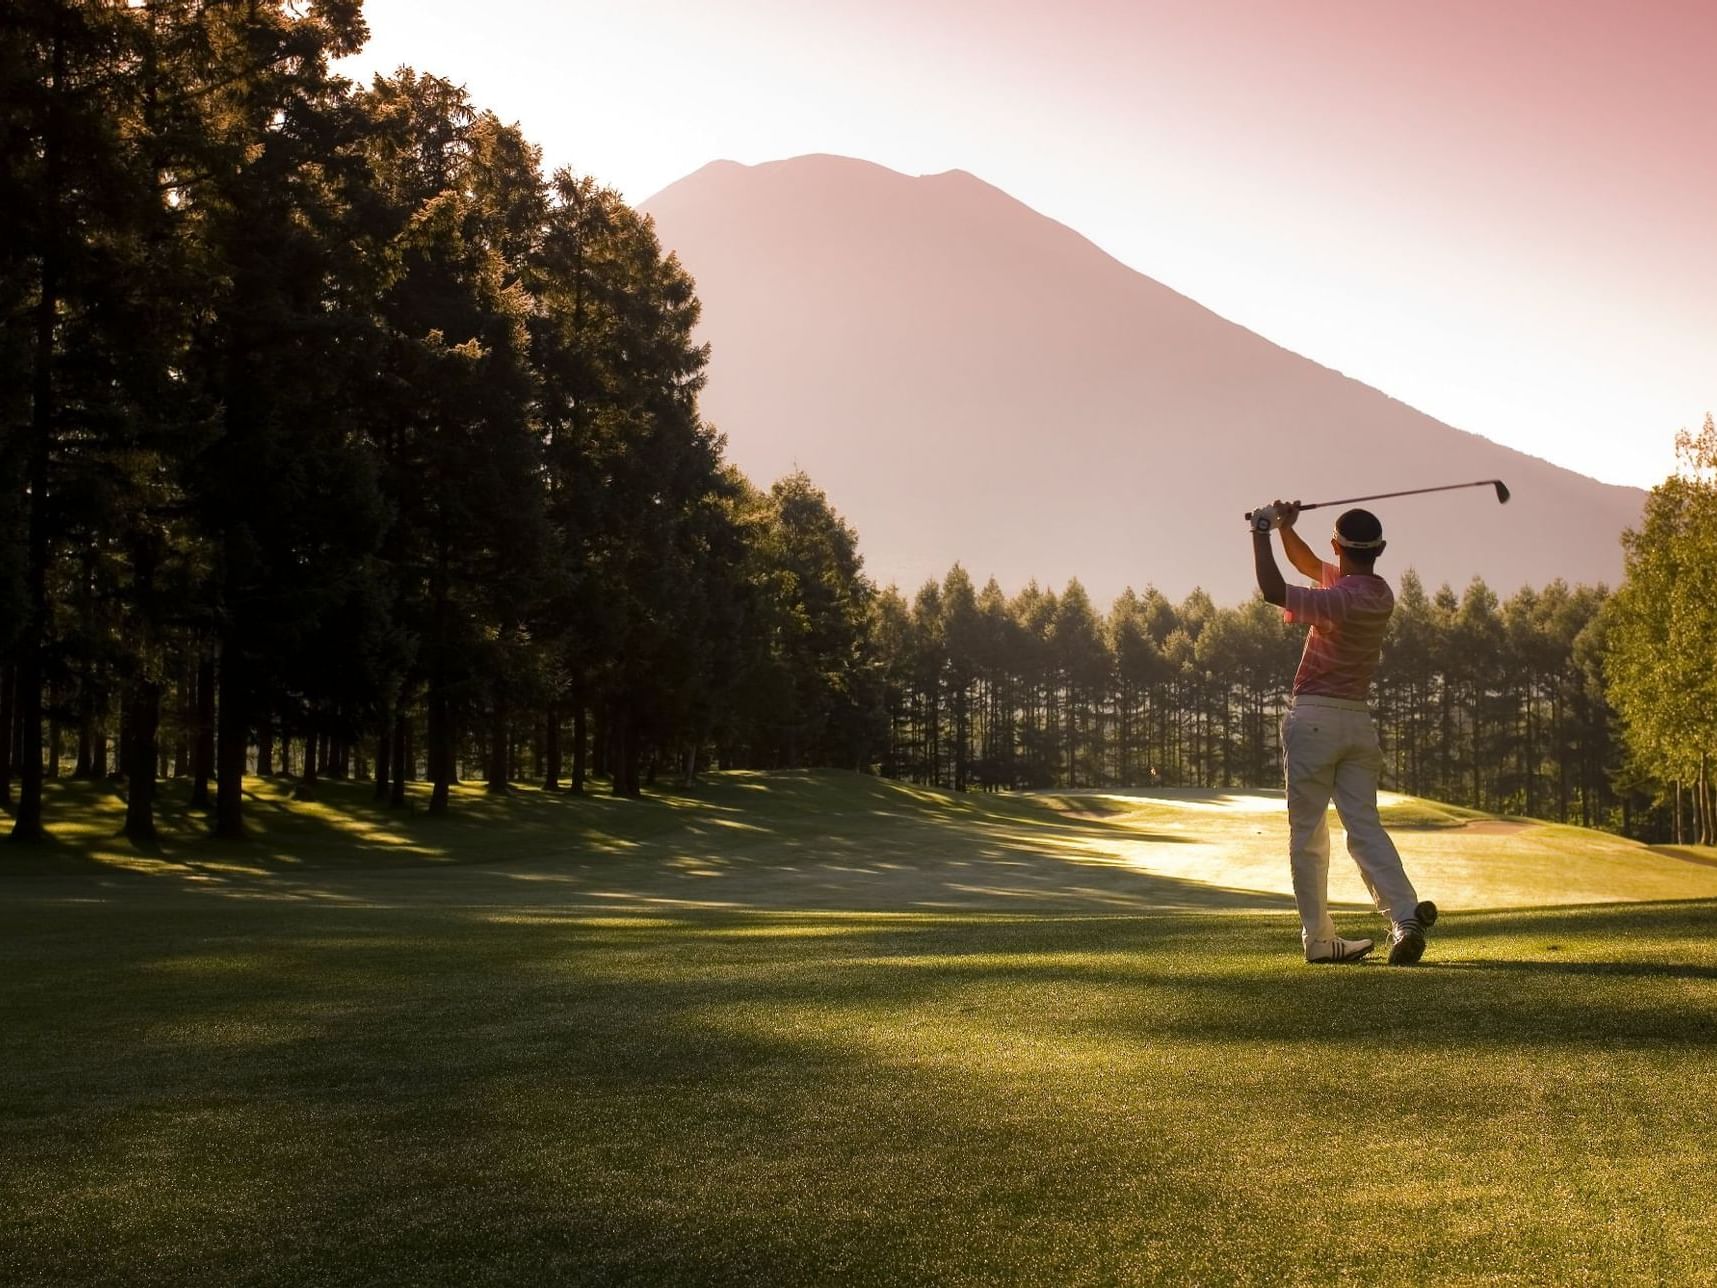 Man playing on Hanazono golf course near Chatrium Niseko Japan